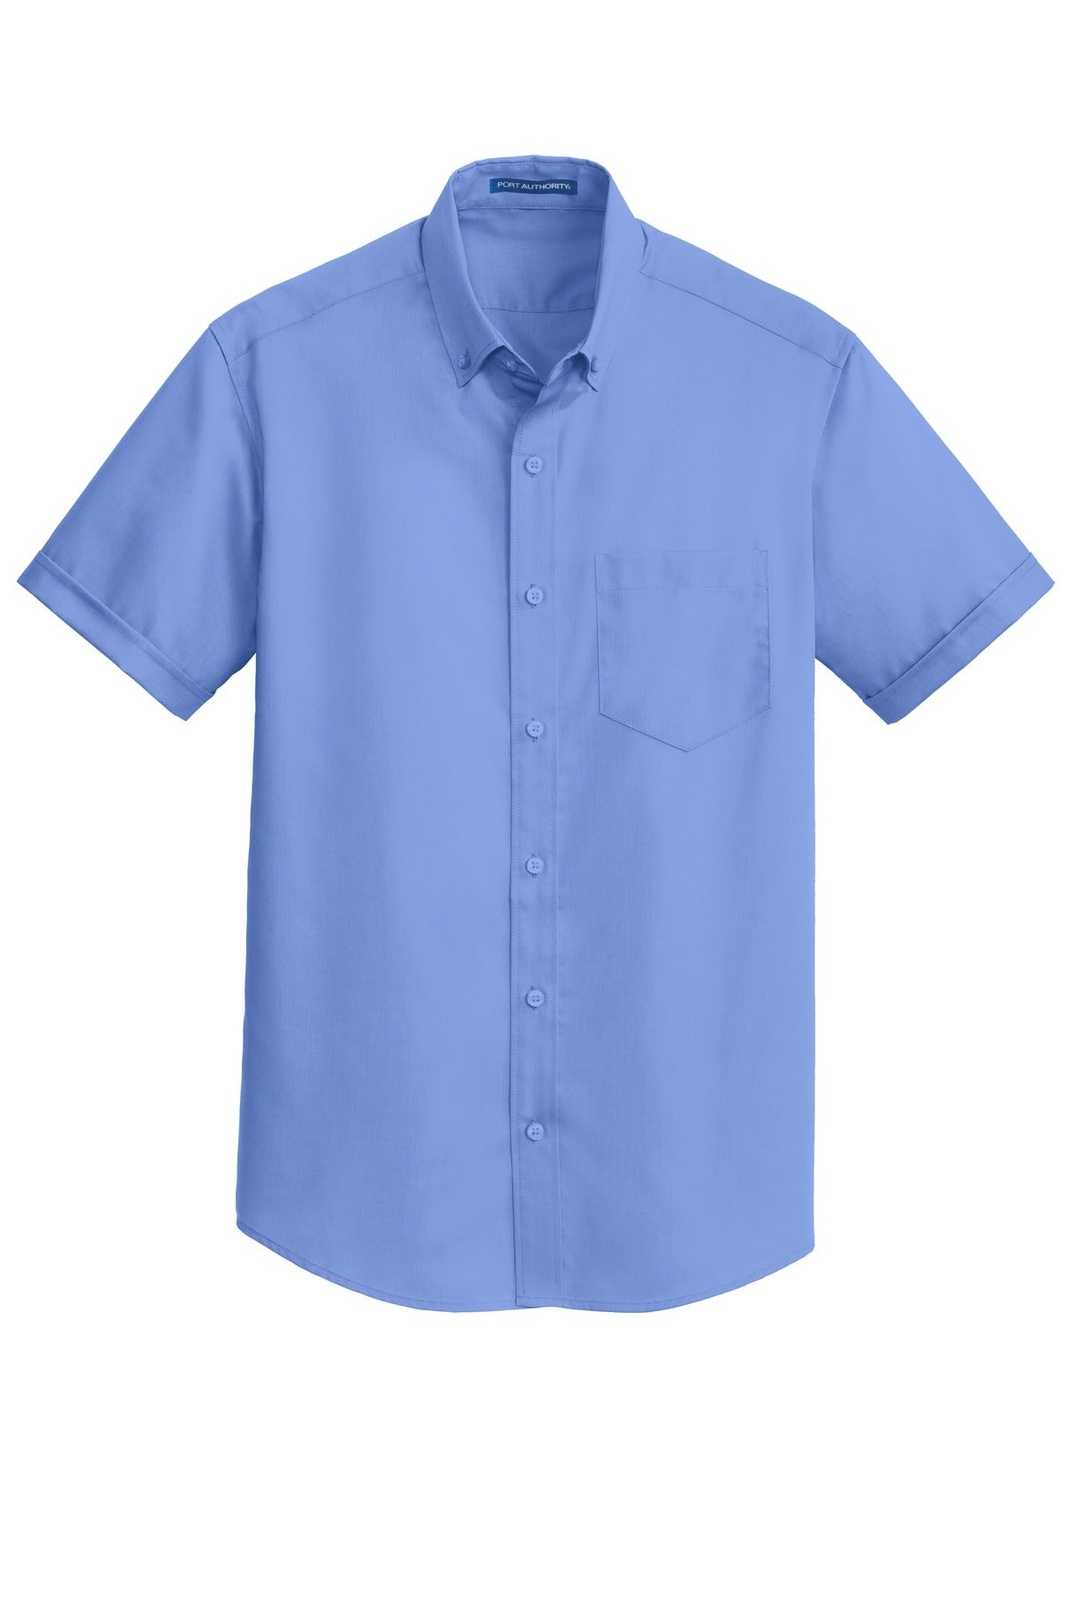 Port Authority S664 Short Sleeve Superpro Twill Shirt - Ultramarine Blue - HIT a Double - 5